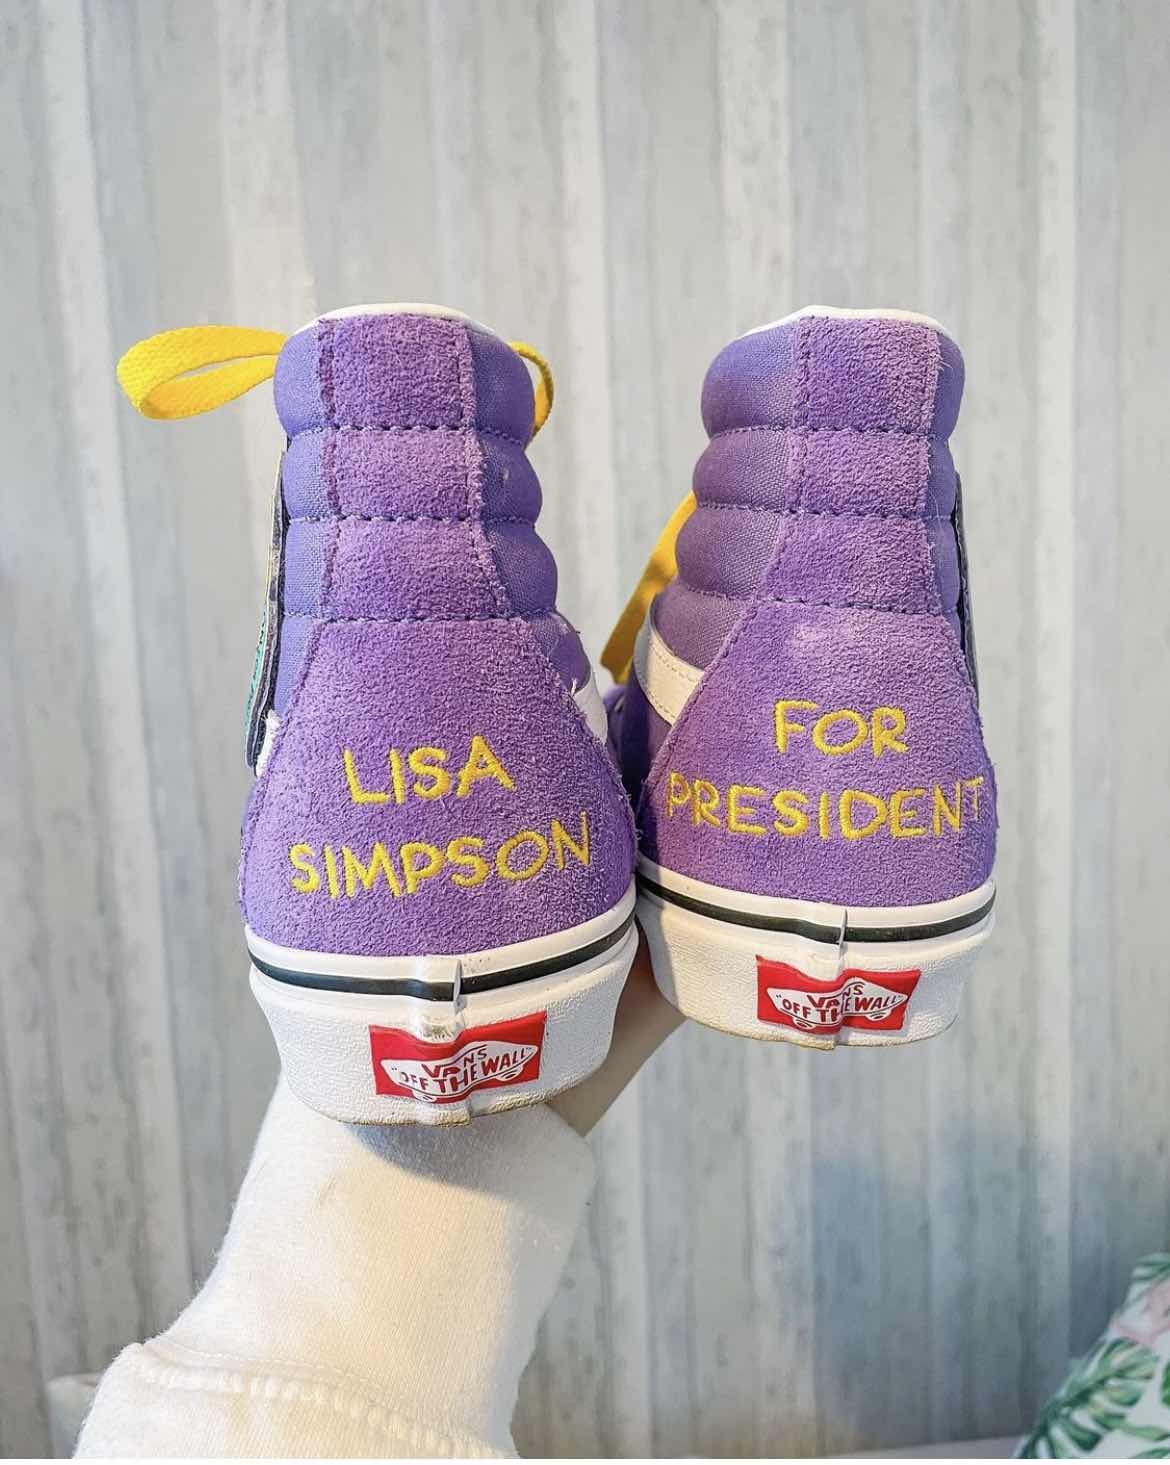 vans x the simpsons - Lisa Simpson for president 